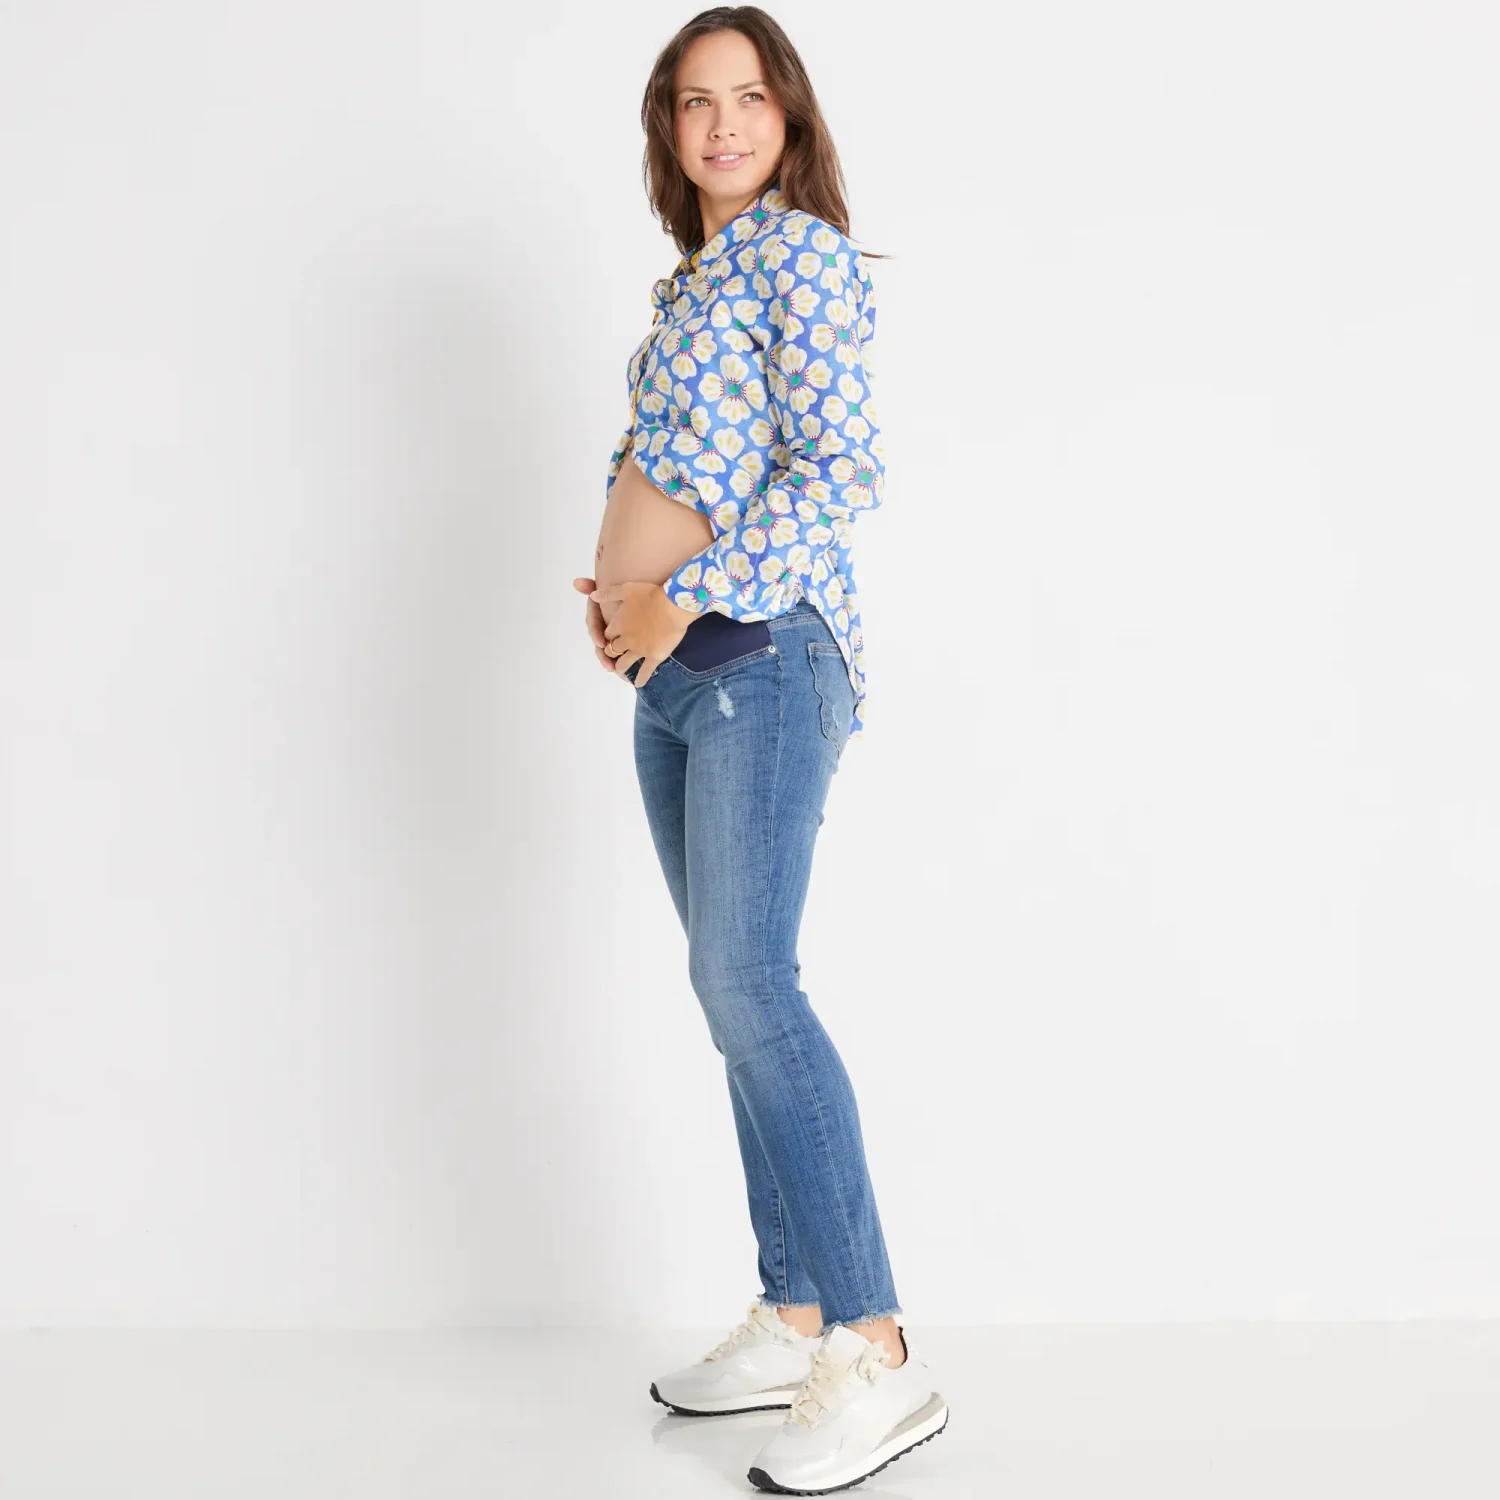 DL1961 brand stylish maternity skinny jeans